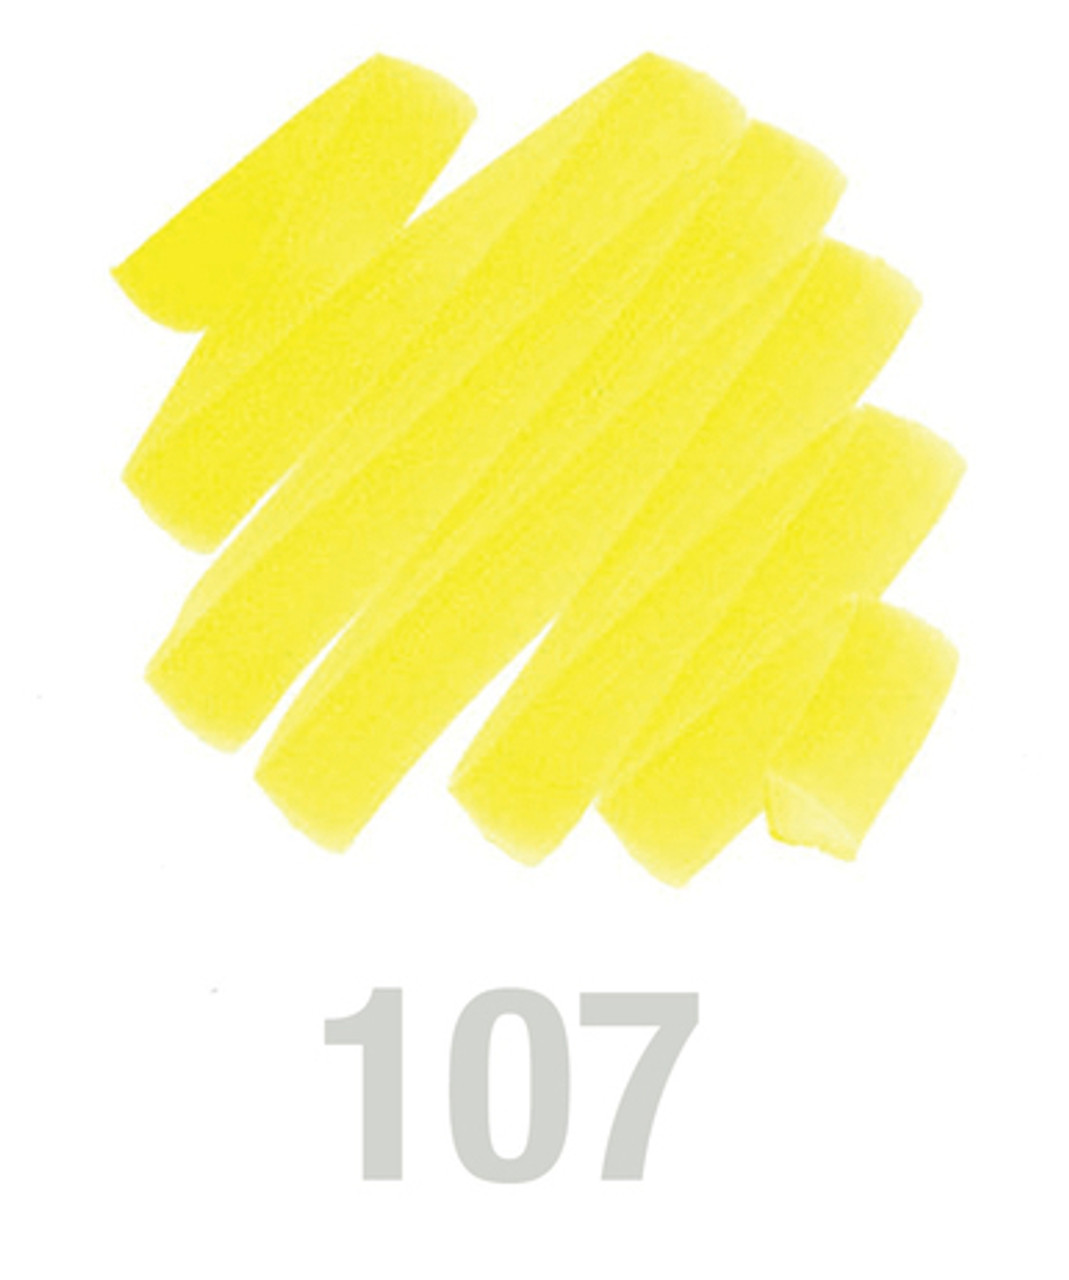 Pitt Artist Brush Pen, 107 Cadmium Yellow